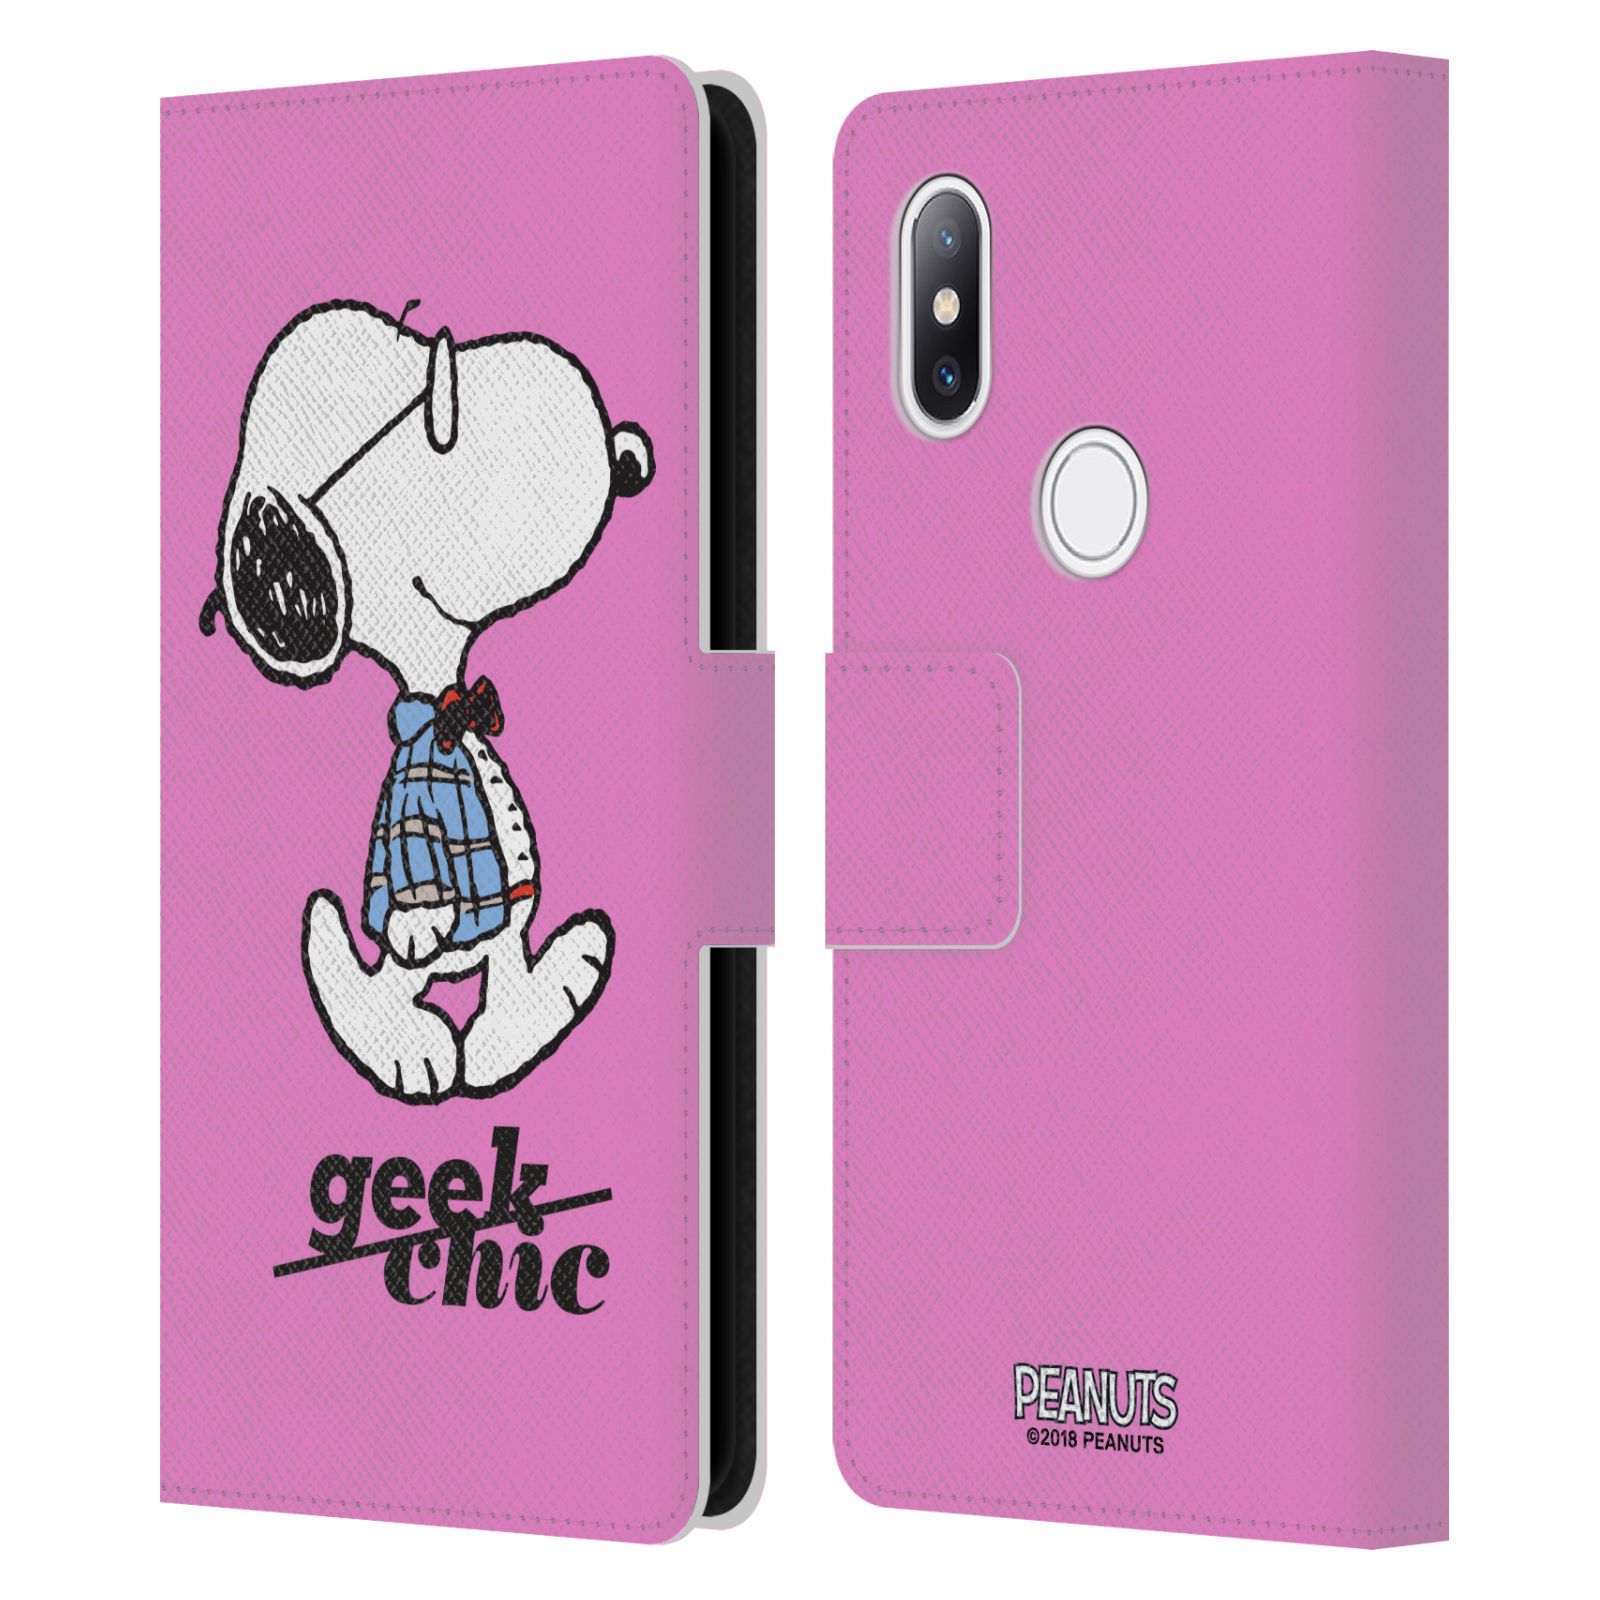 Pouzdro na mobil Xiaomi Mi Mix 2s - Head Case - Peanuts - růžový pejsek snoopy nerd